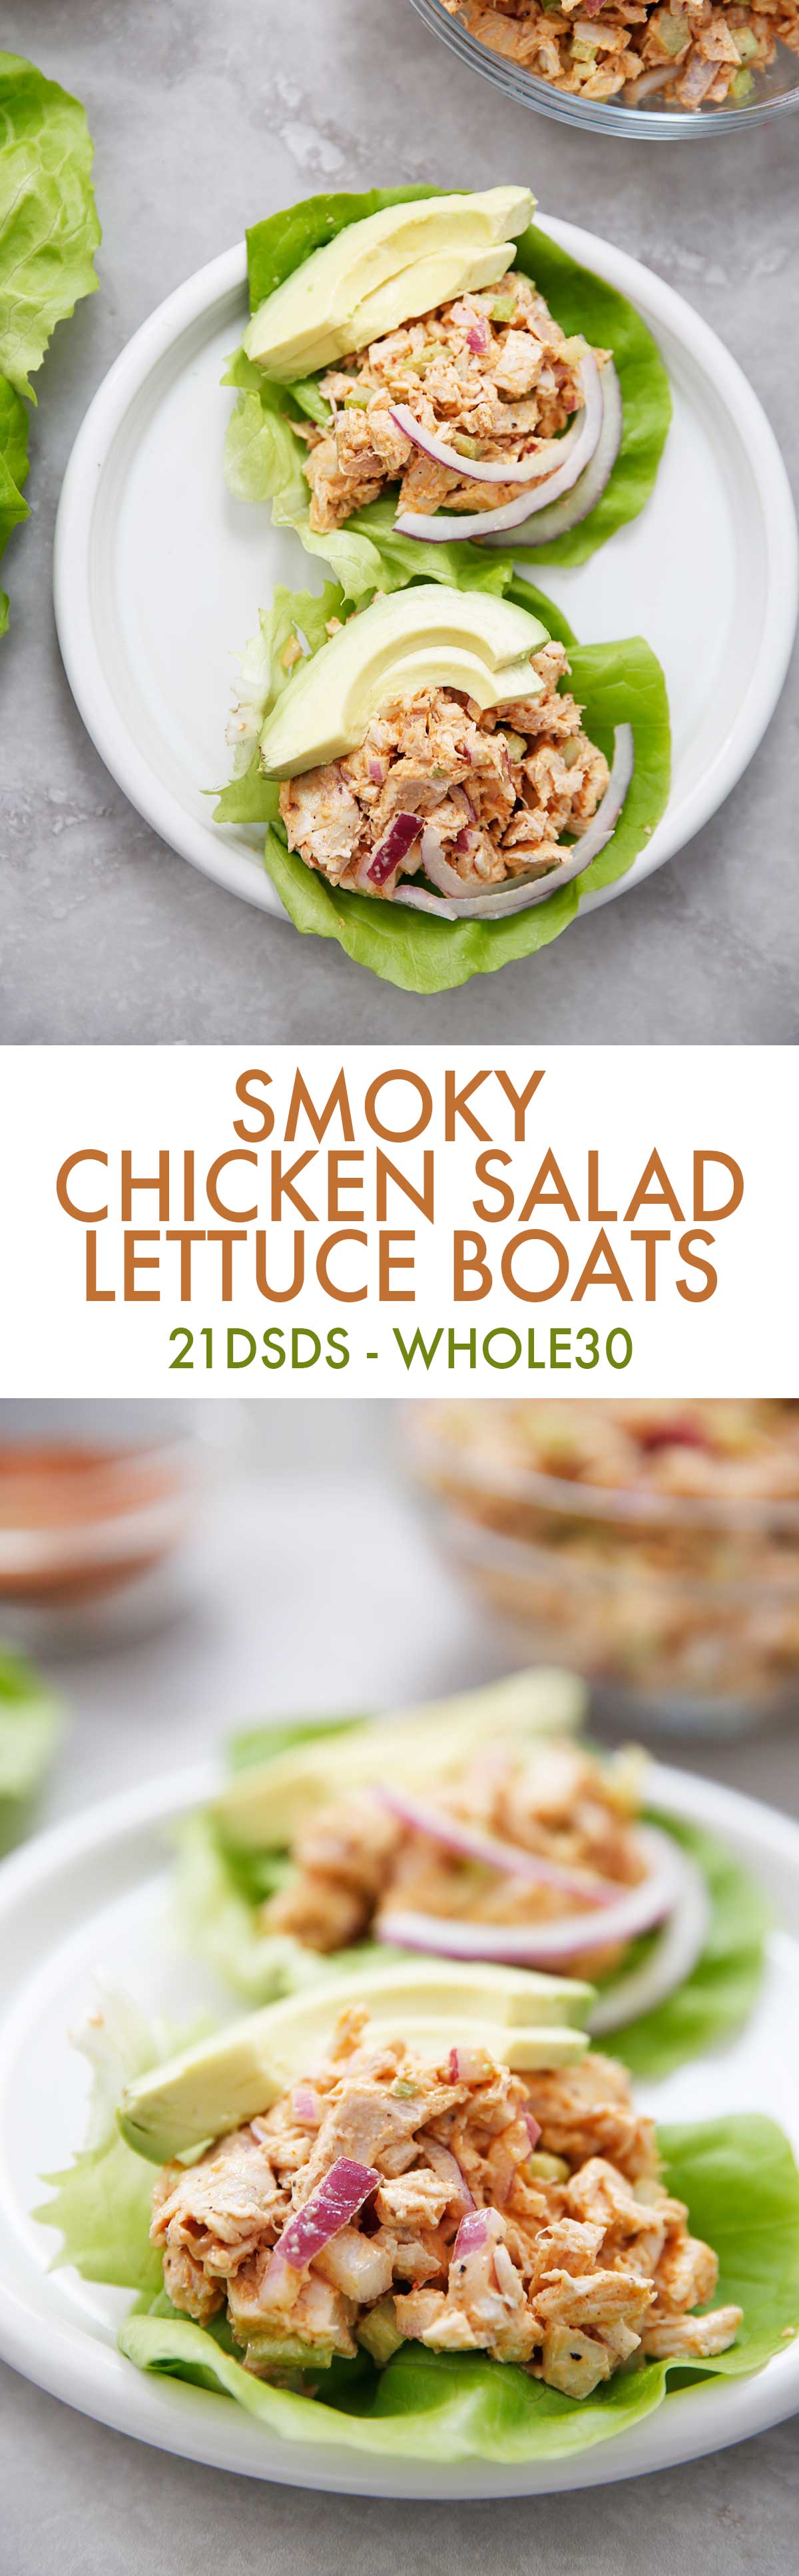 Boarding House Lake Charles Chicken Salad Recipe